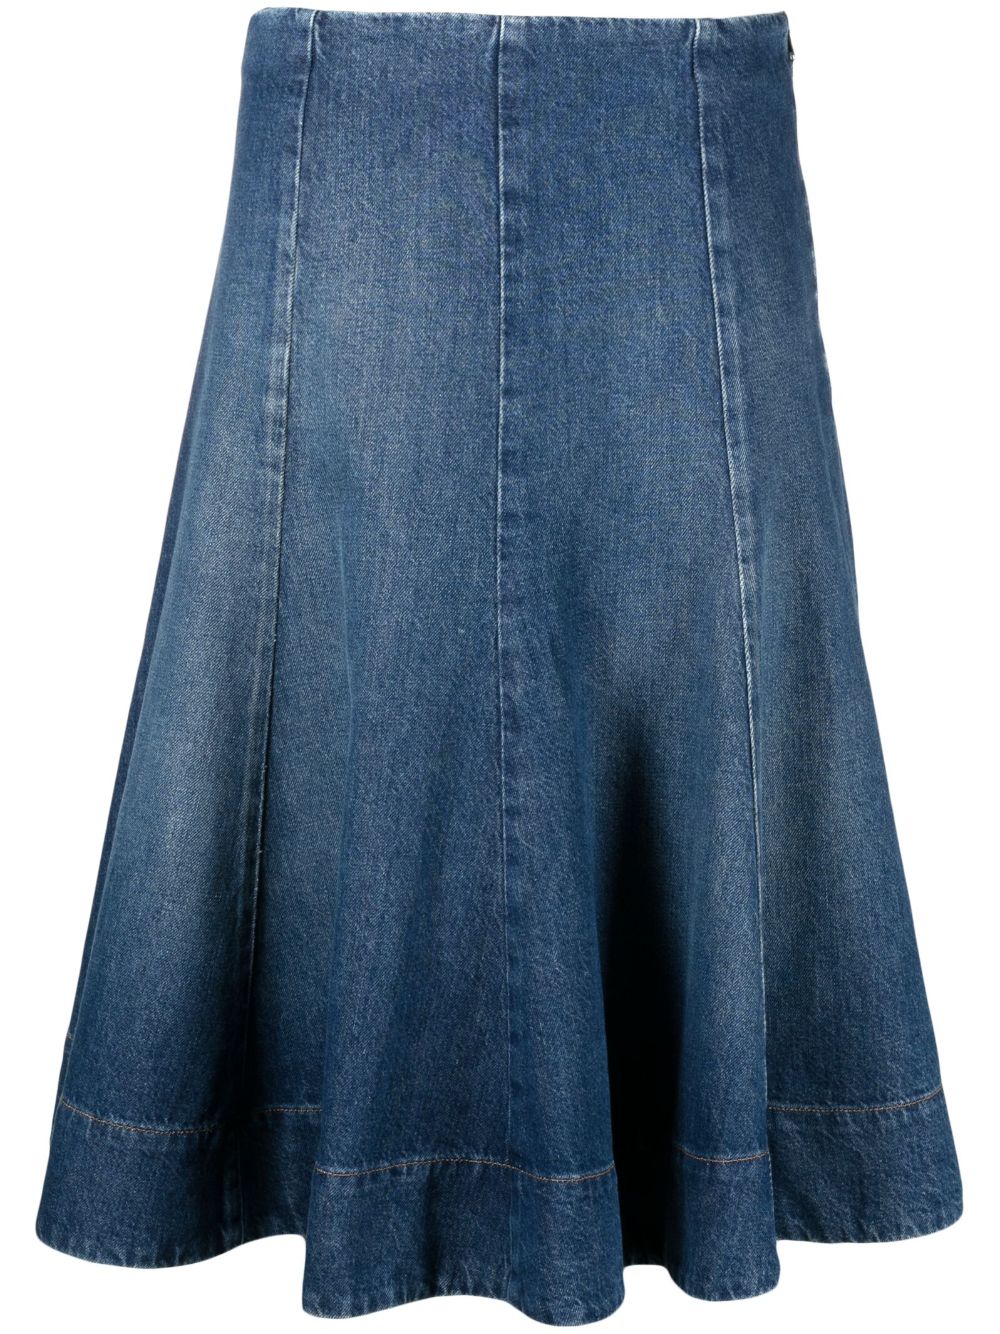 Faded Indigo Denim Skirt - Trendy and Timeless